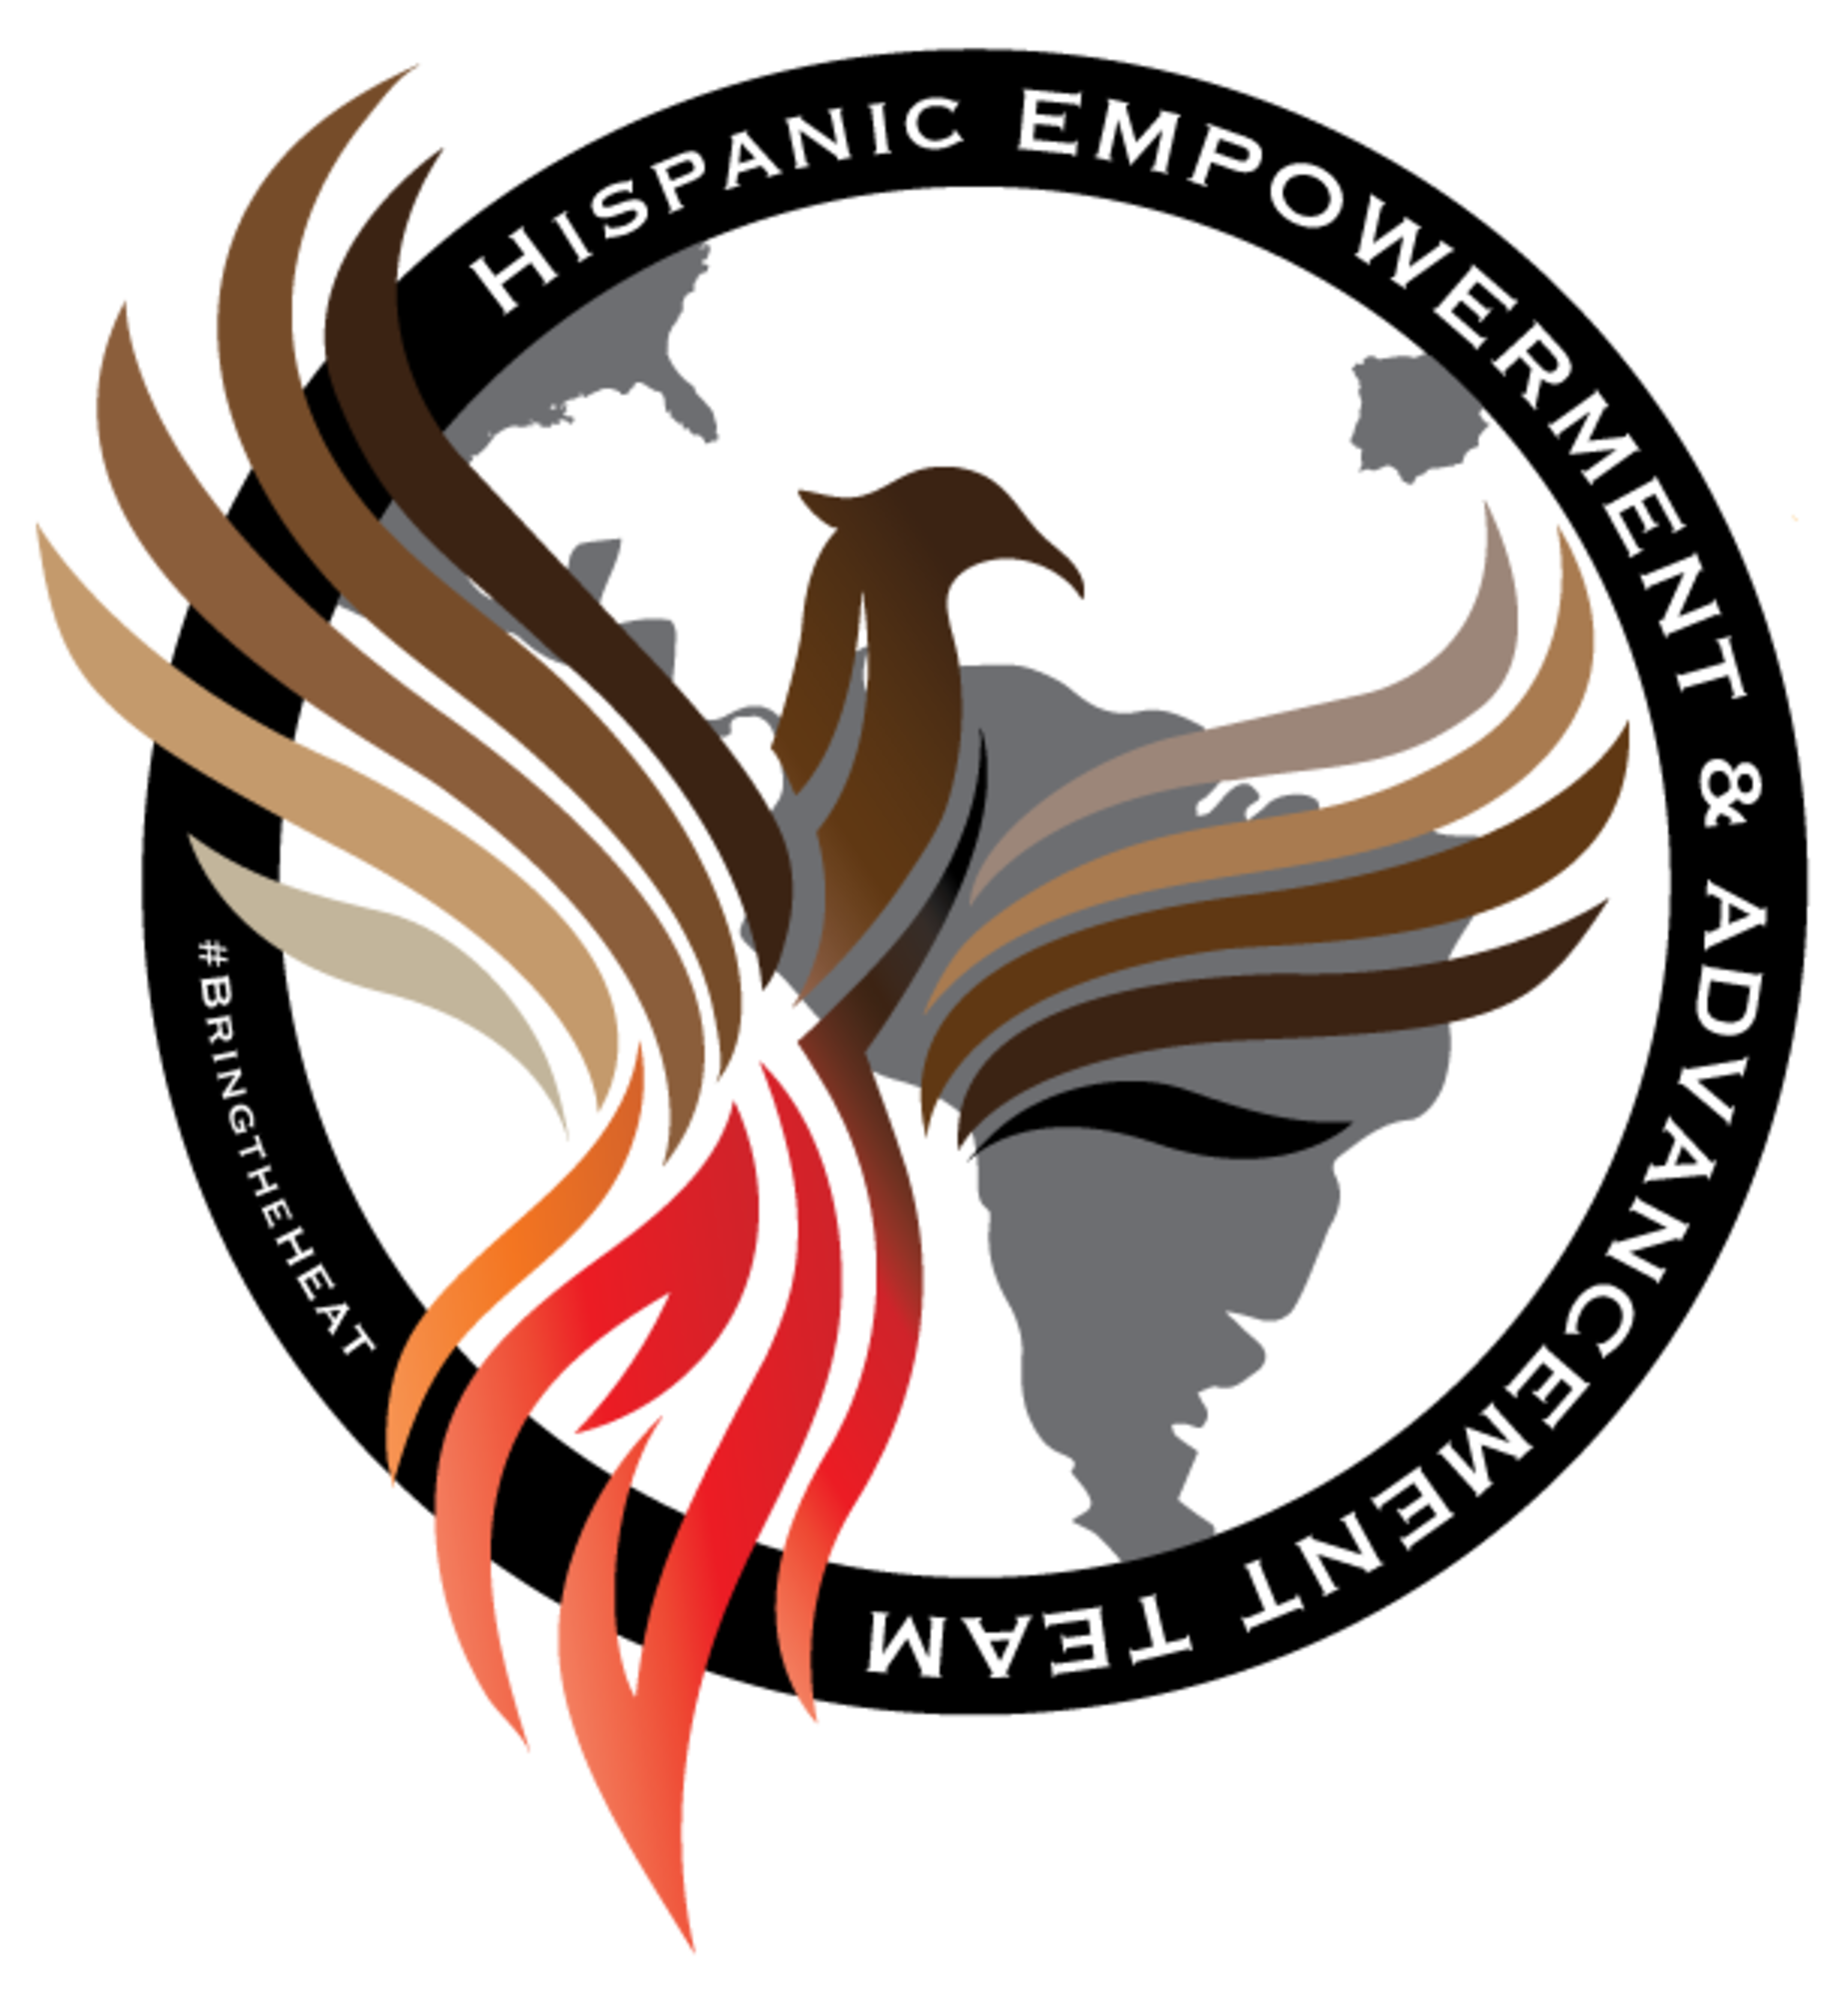 Hispanic Empowerment and Advancement Team logo.